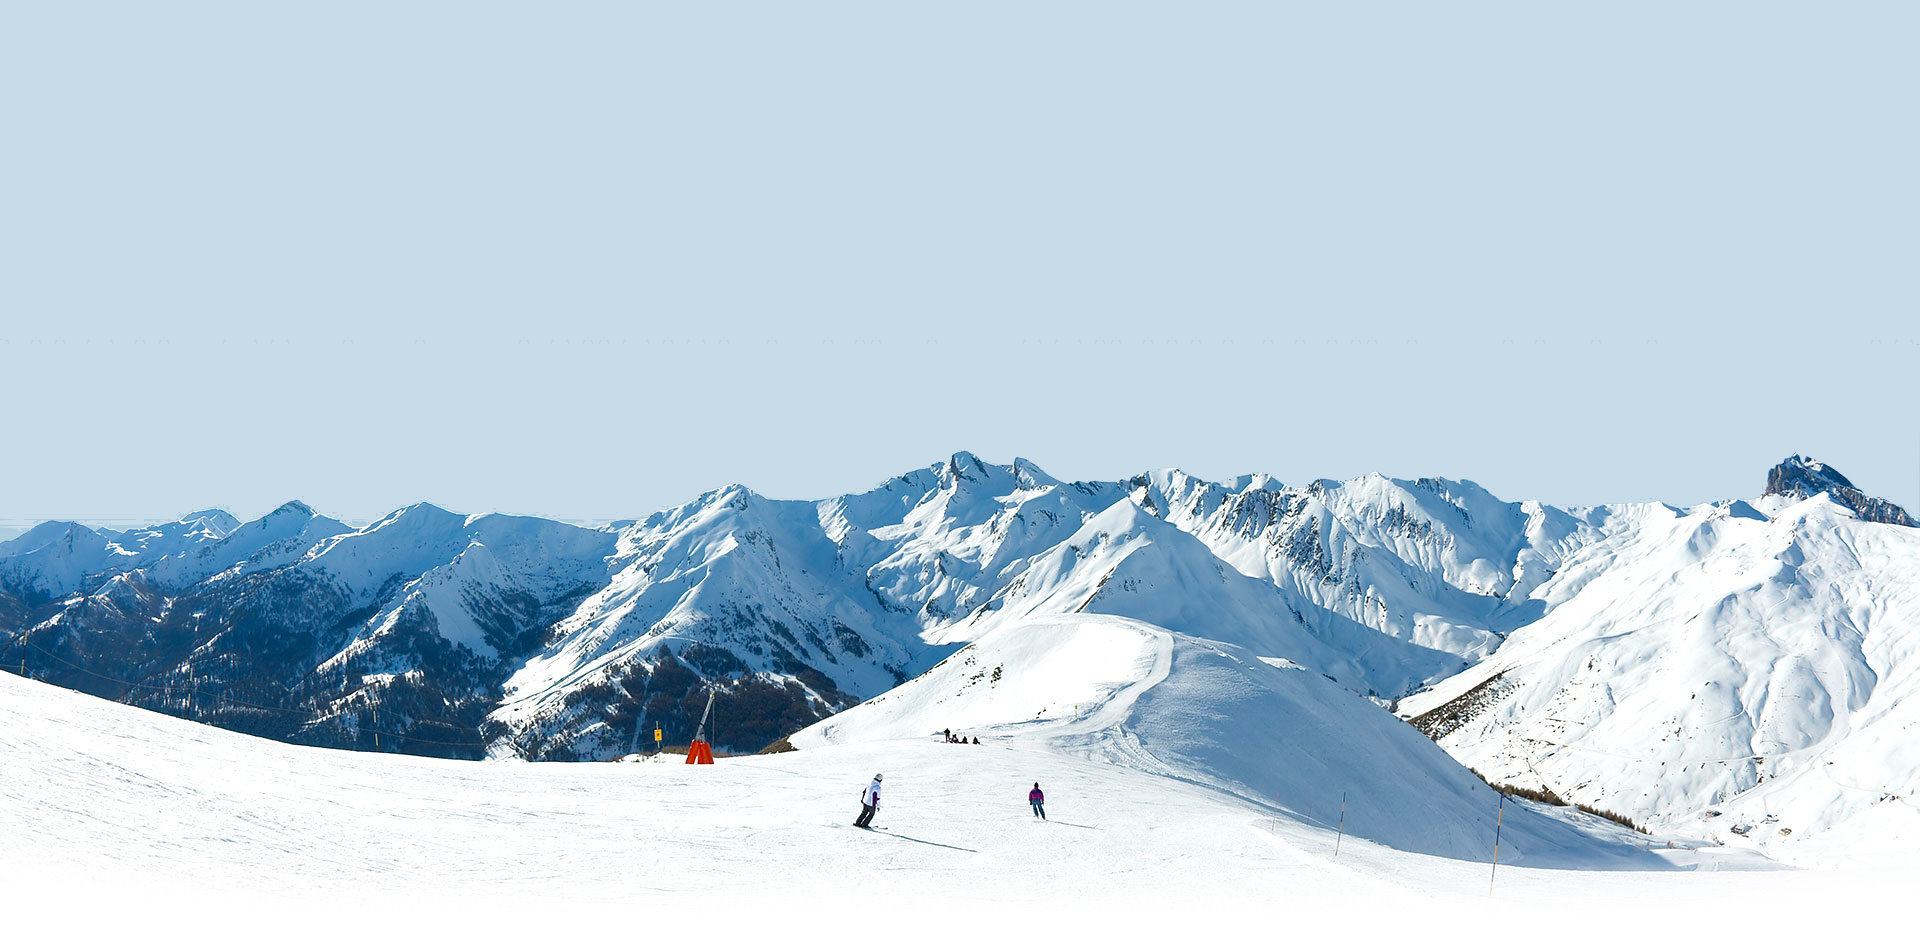  Ski centar „Brusnica“, raj za skijaše na planini Vranica